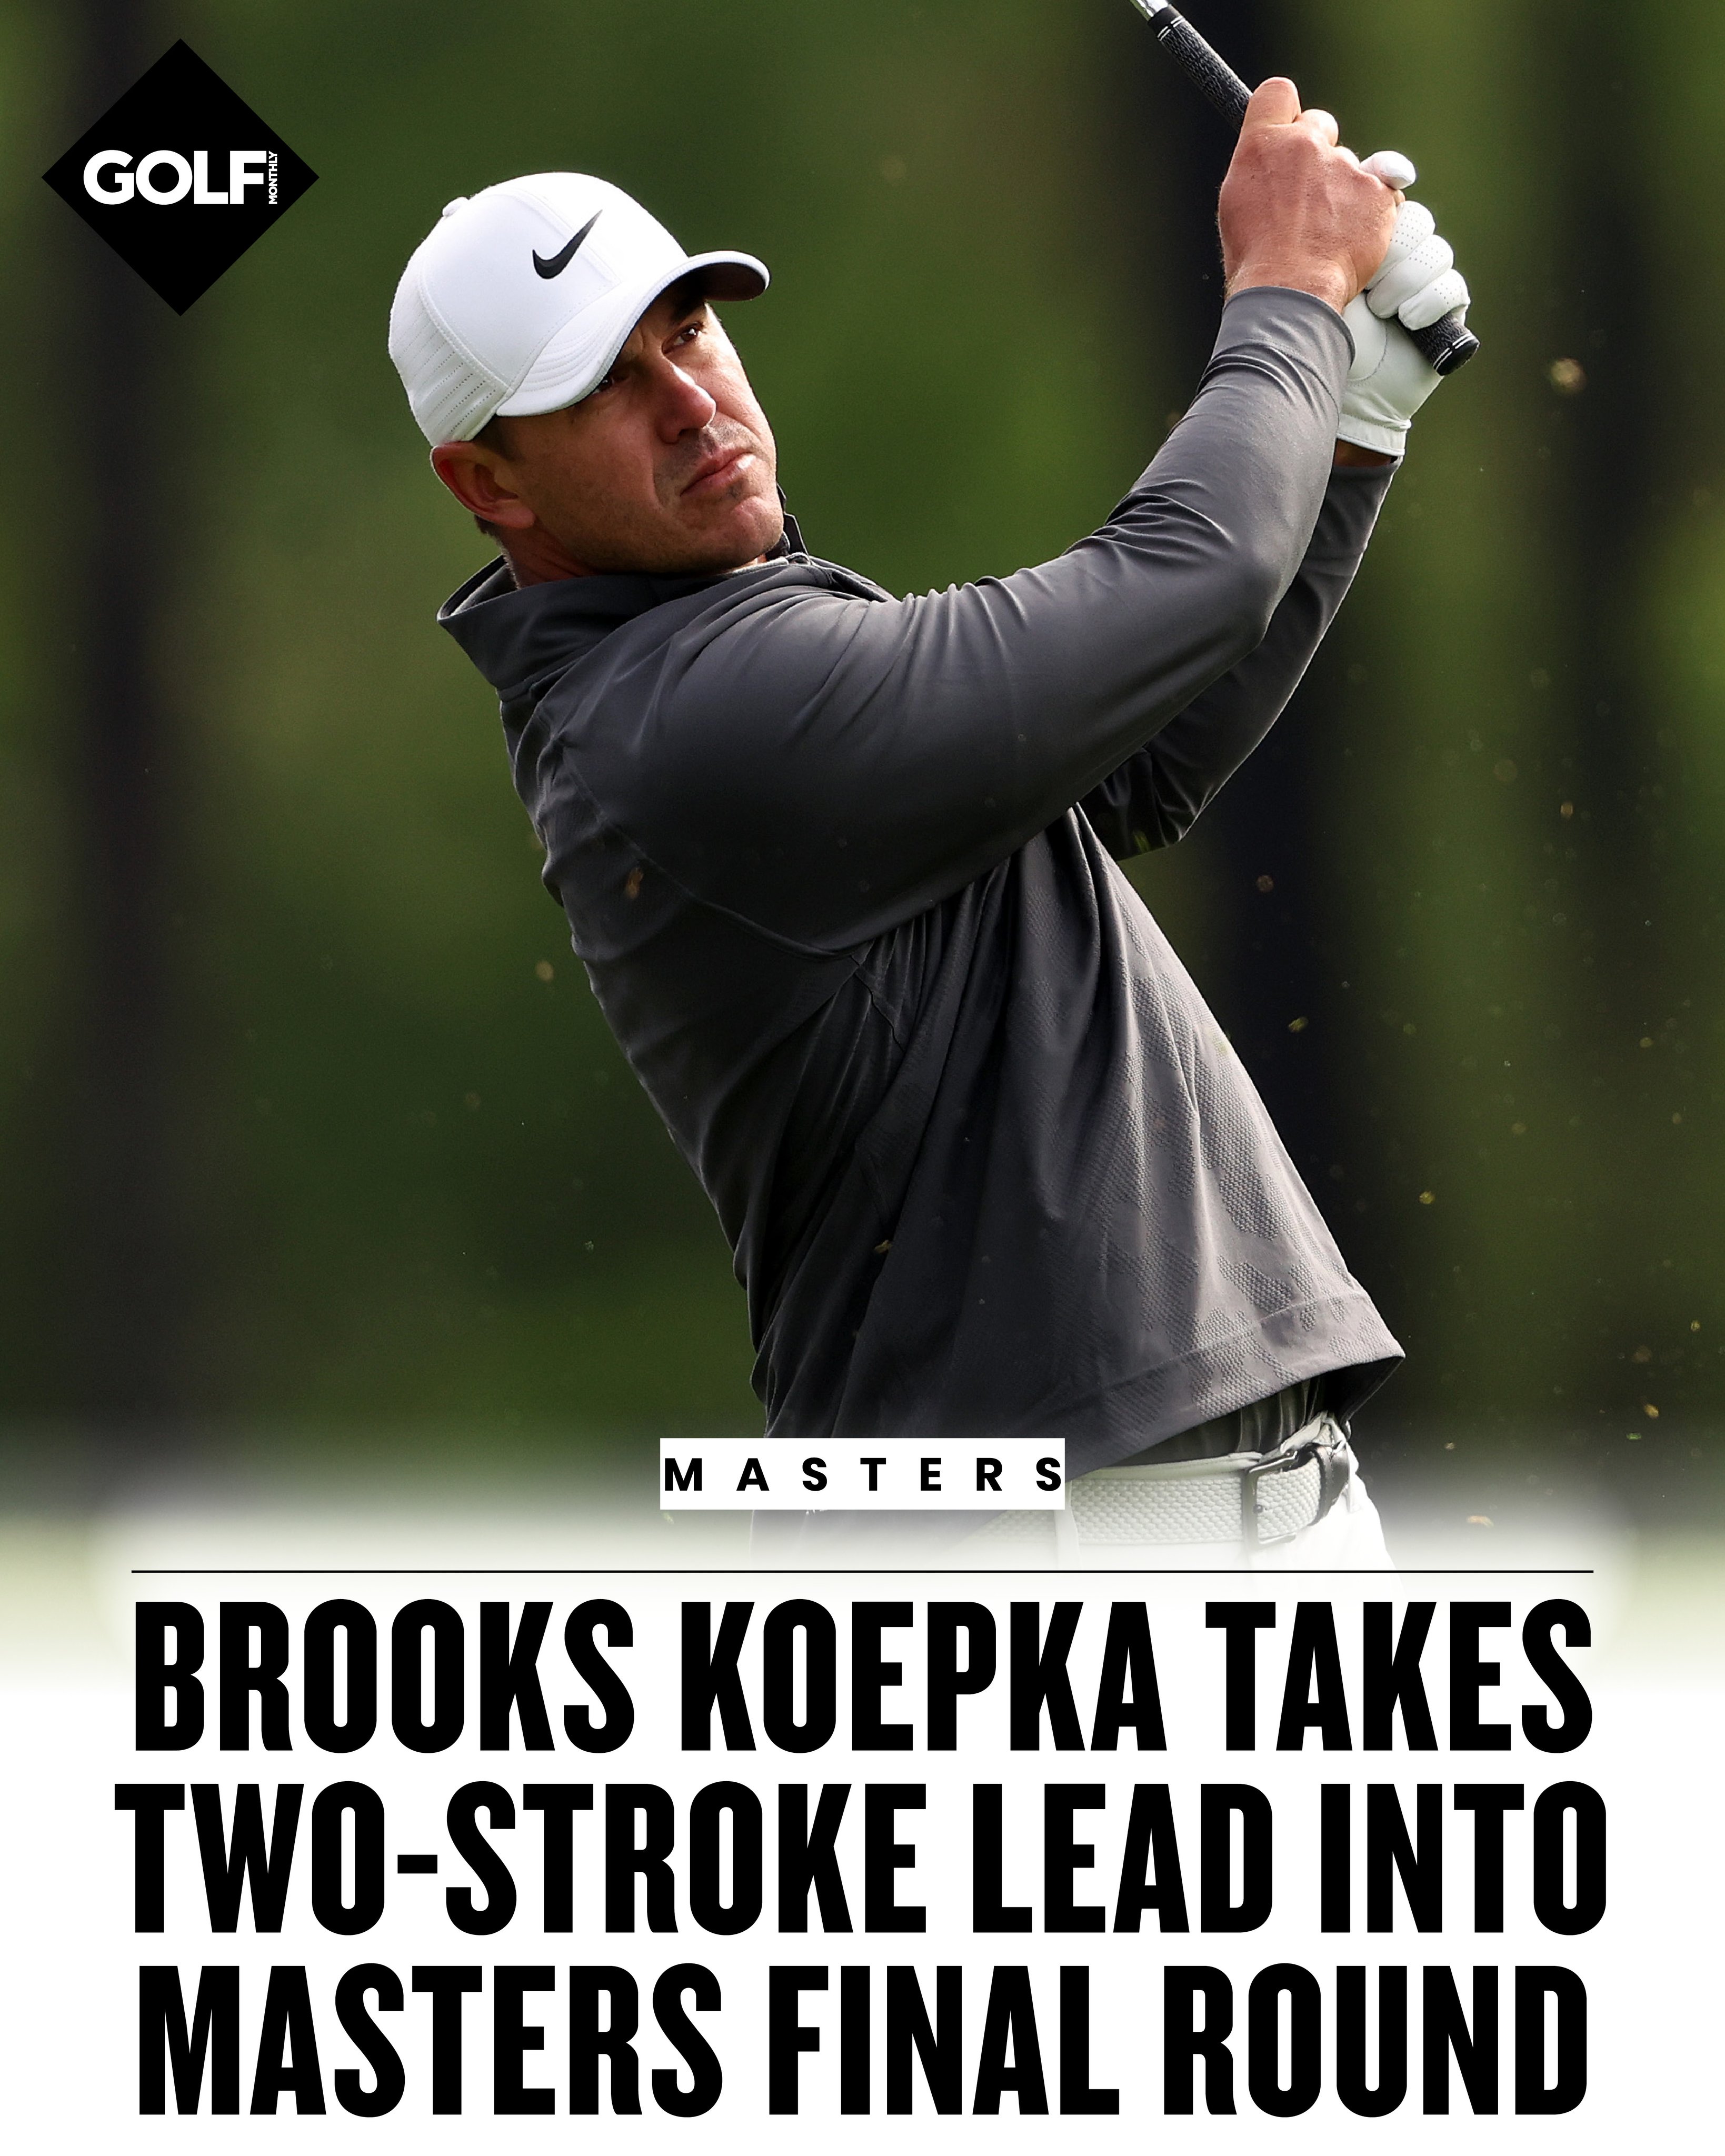 Brooks Koepka takes one-stroke lead into final round of PGA